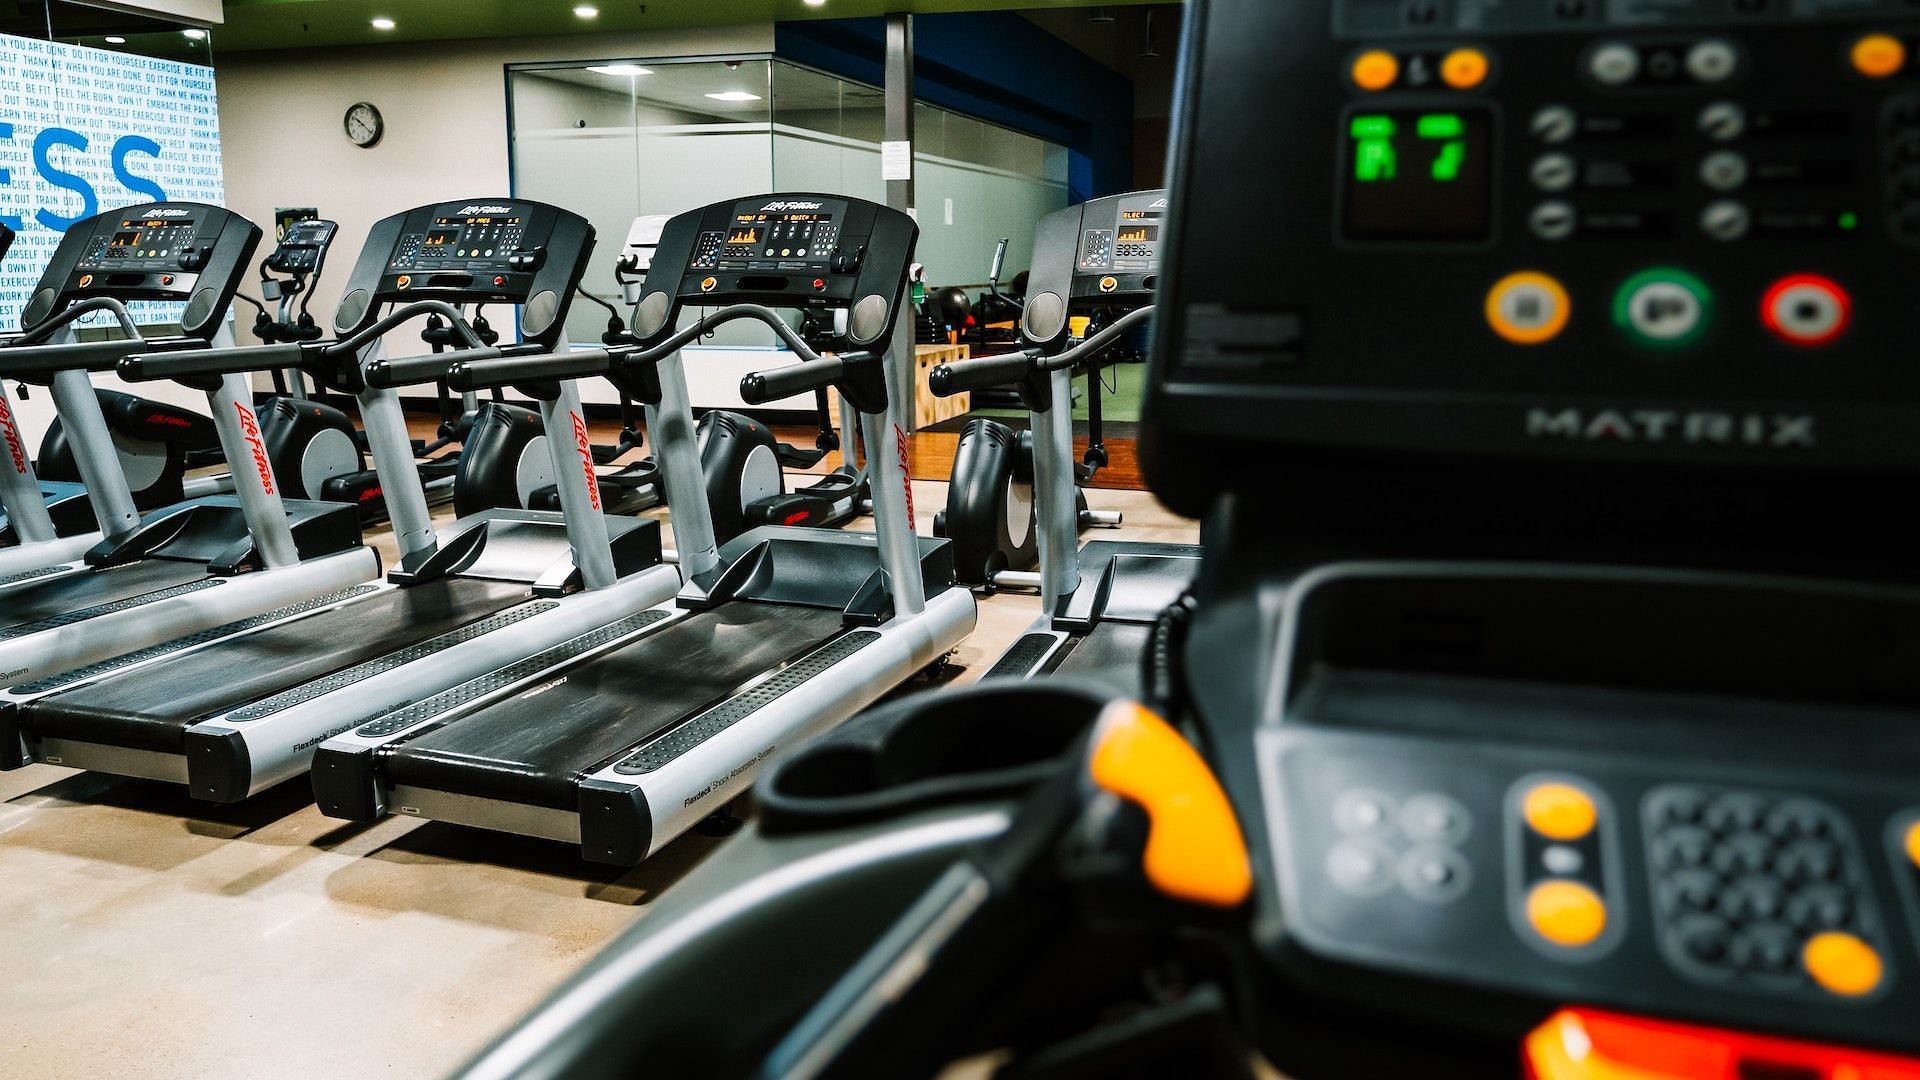 Treadmills are generally indoors. Image via Unsplash/Ryan de Hamer